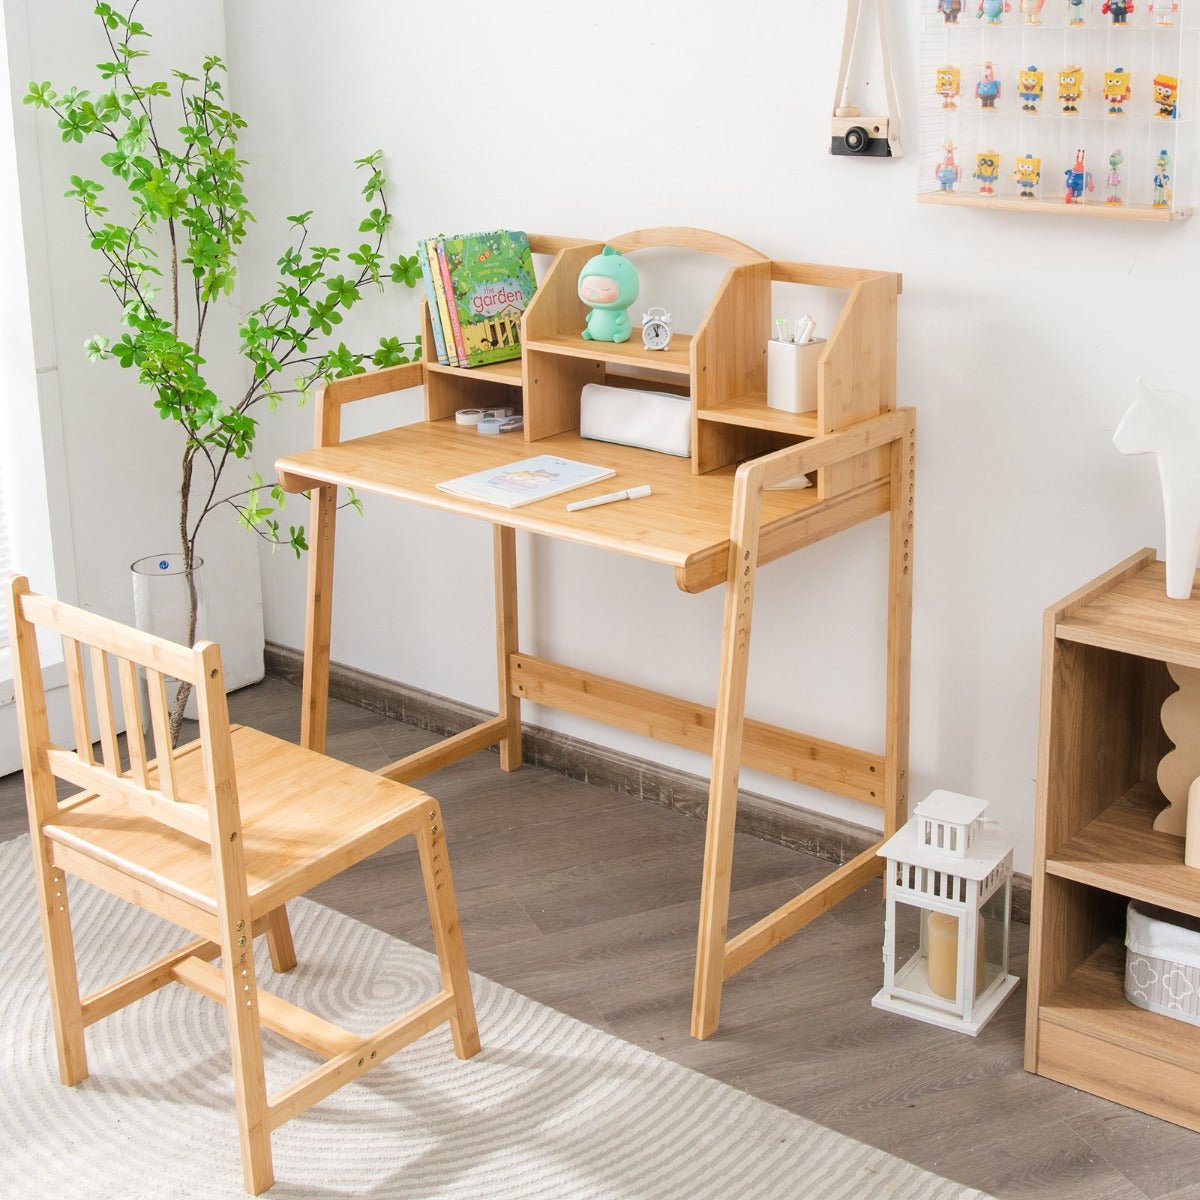 Space-Saving Bamboo Desk for Creative Kids